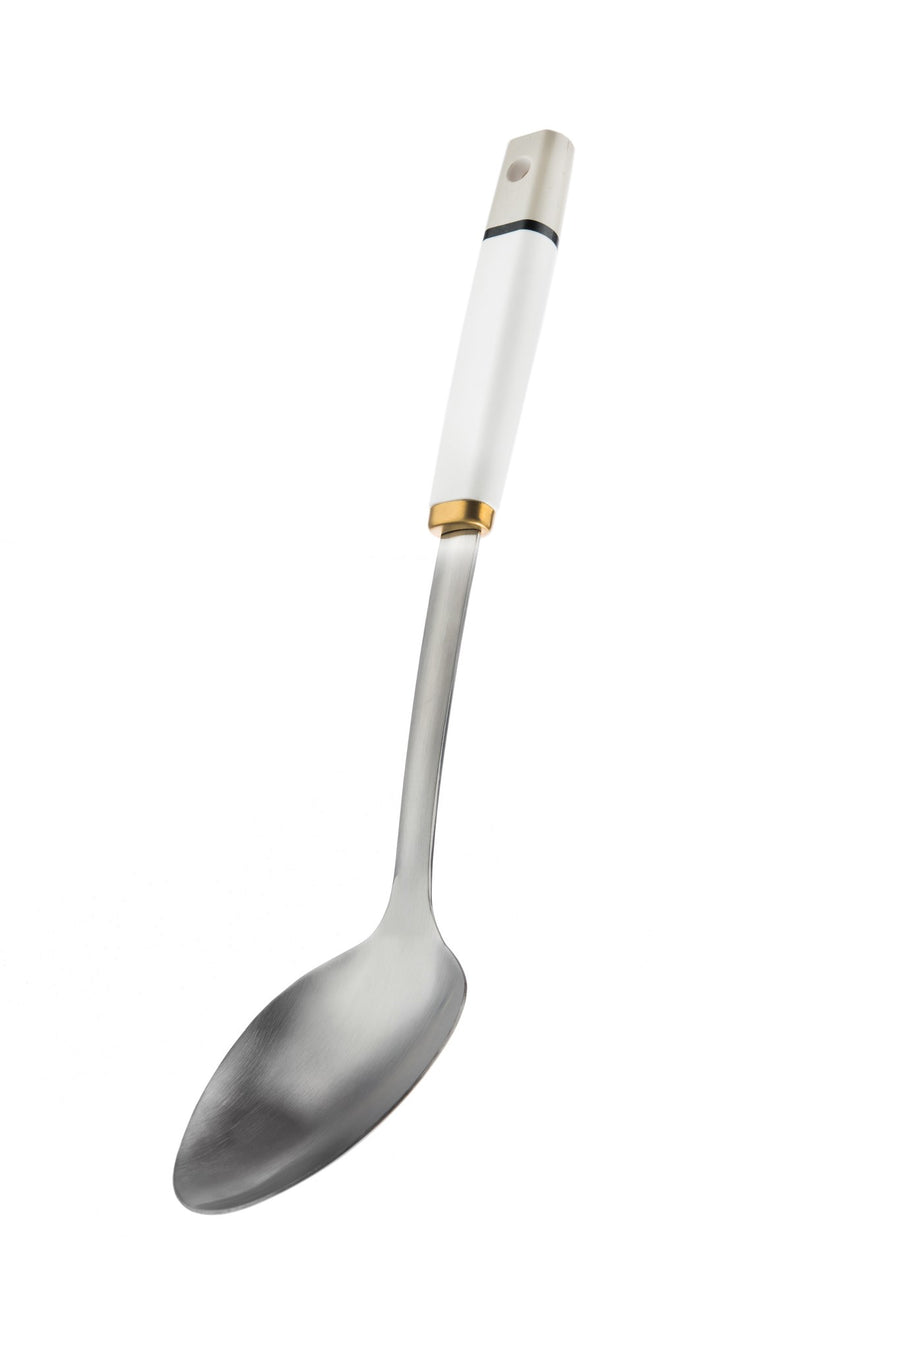 The Kitchen Pantry Spoon